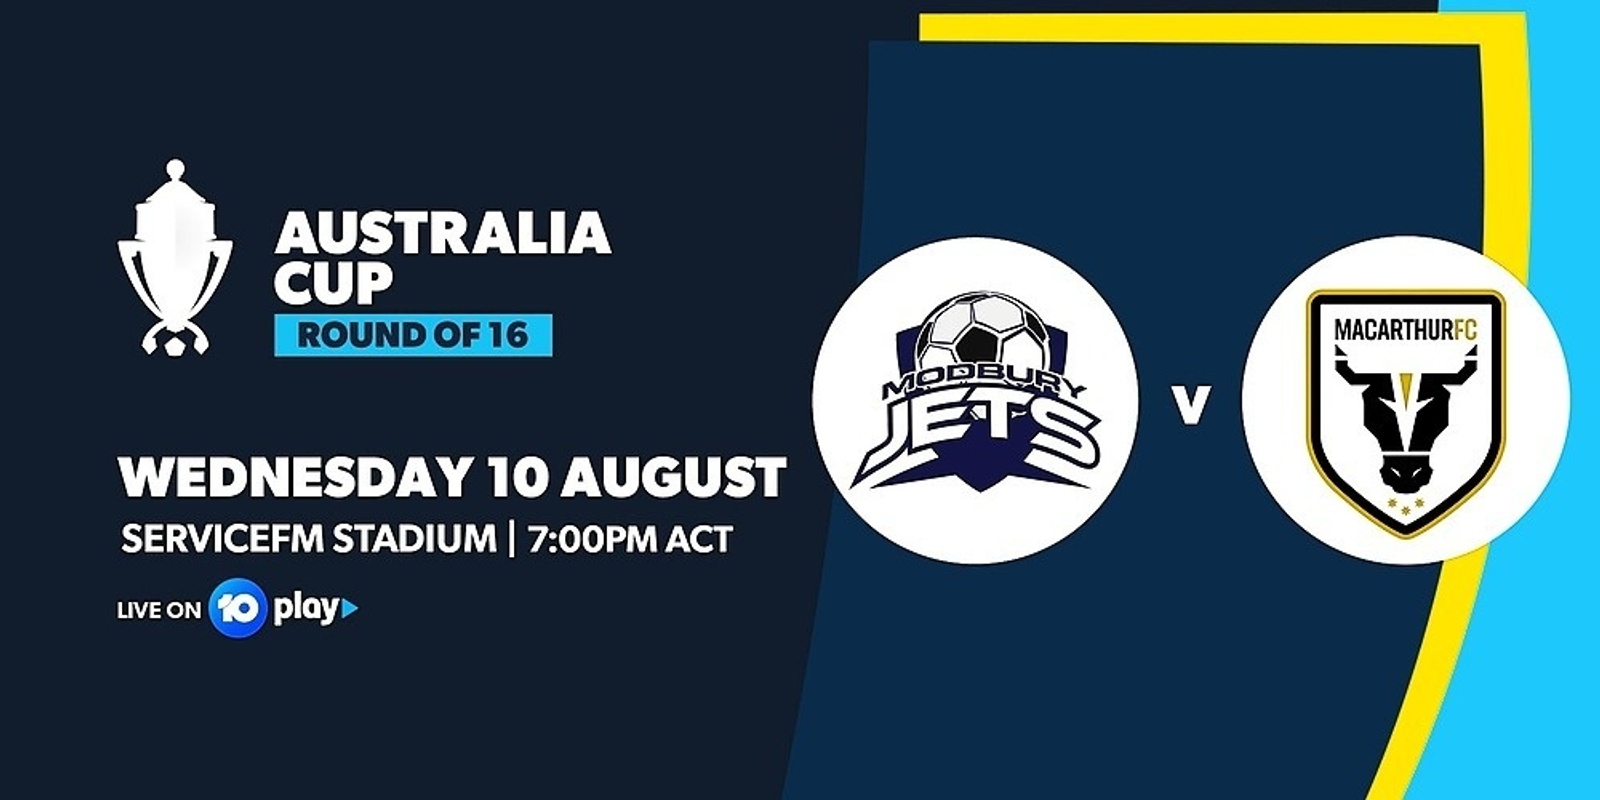 Modbury Jets v Macarthur FC | Australia Cup Round of 16